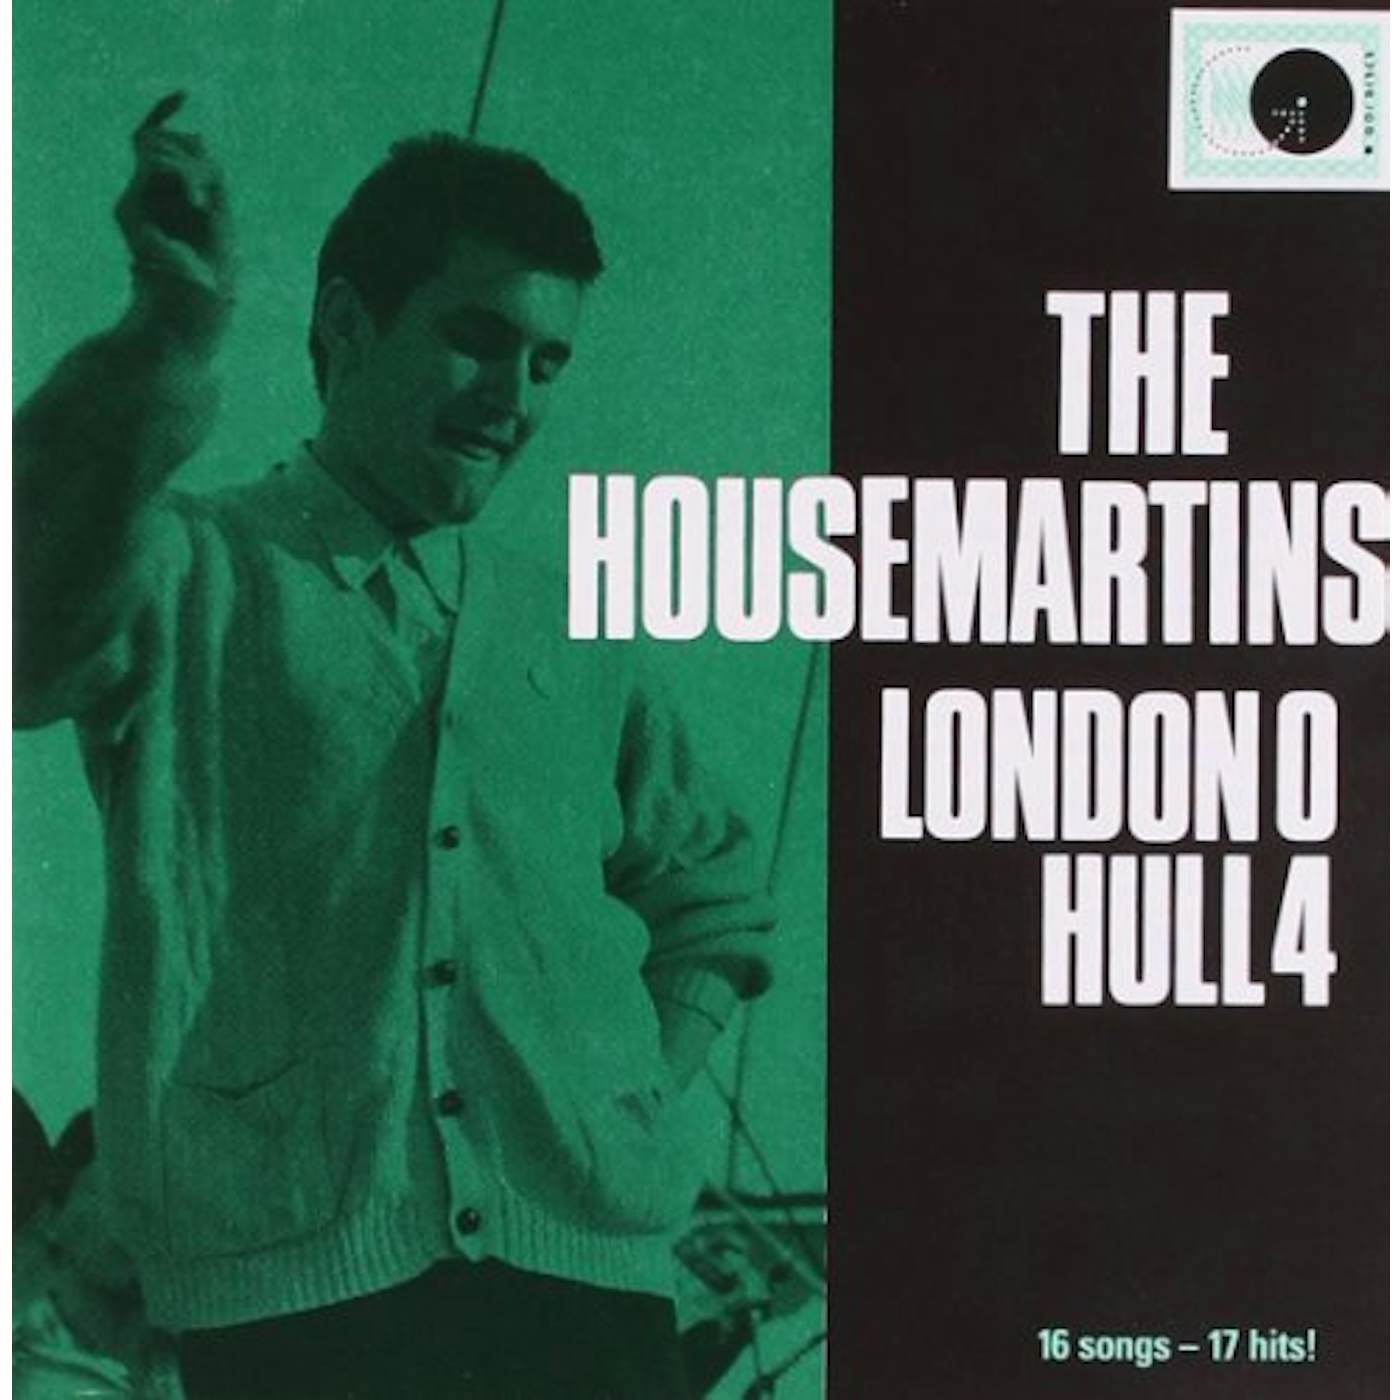 The Housemartins LONDON 0 HULL 4 CD